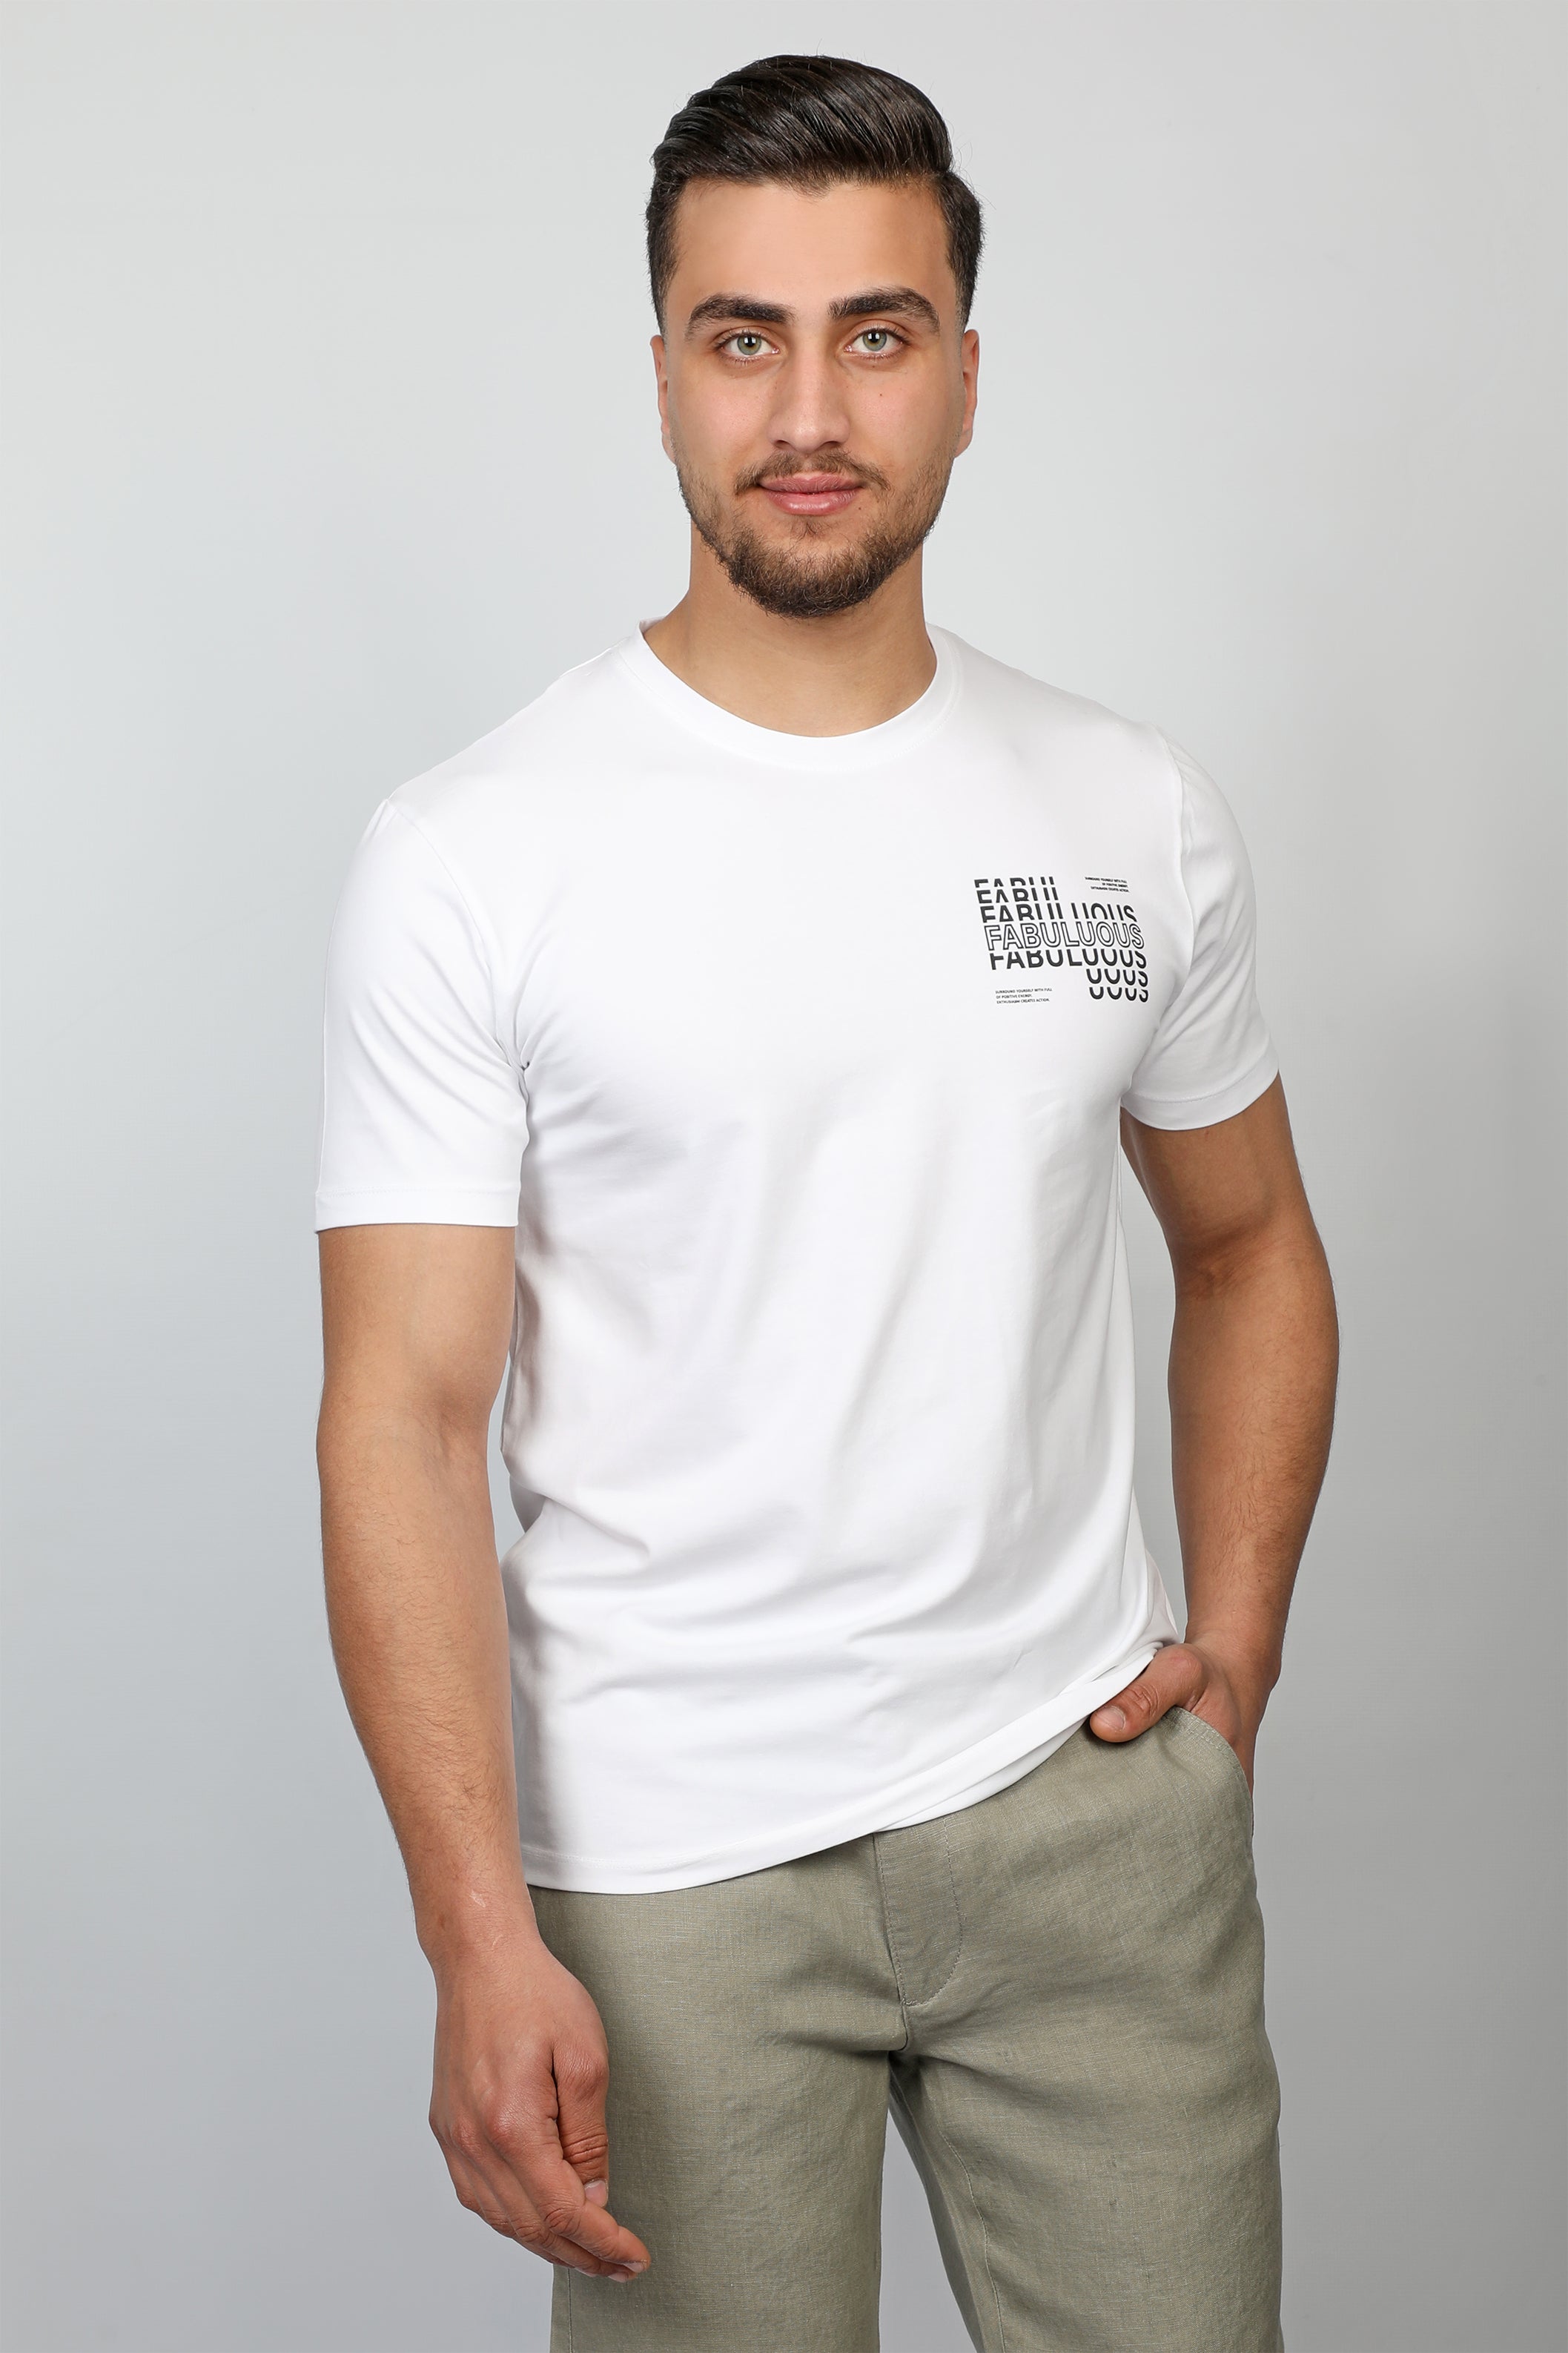 "Fabuluous" Front Designed White T-shirt